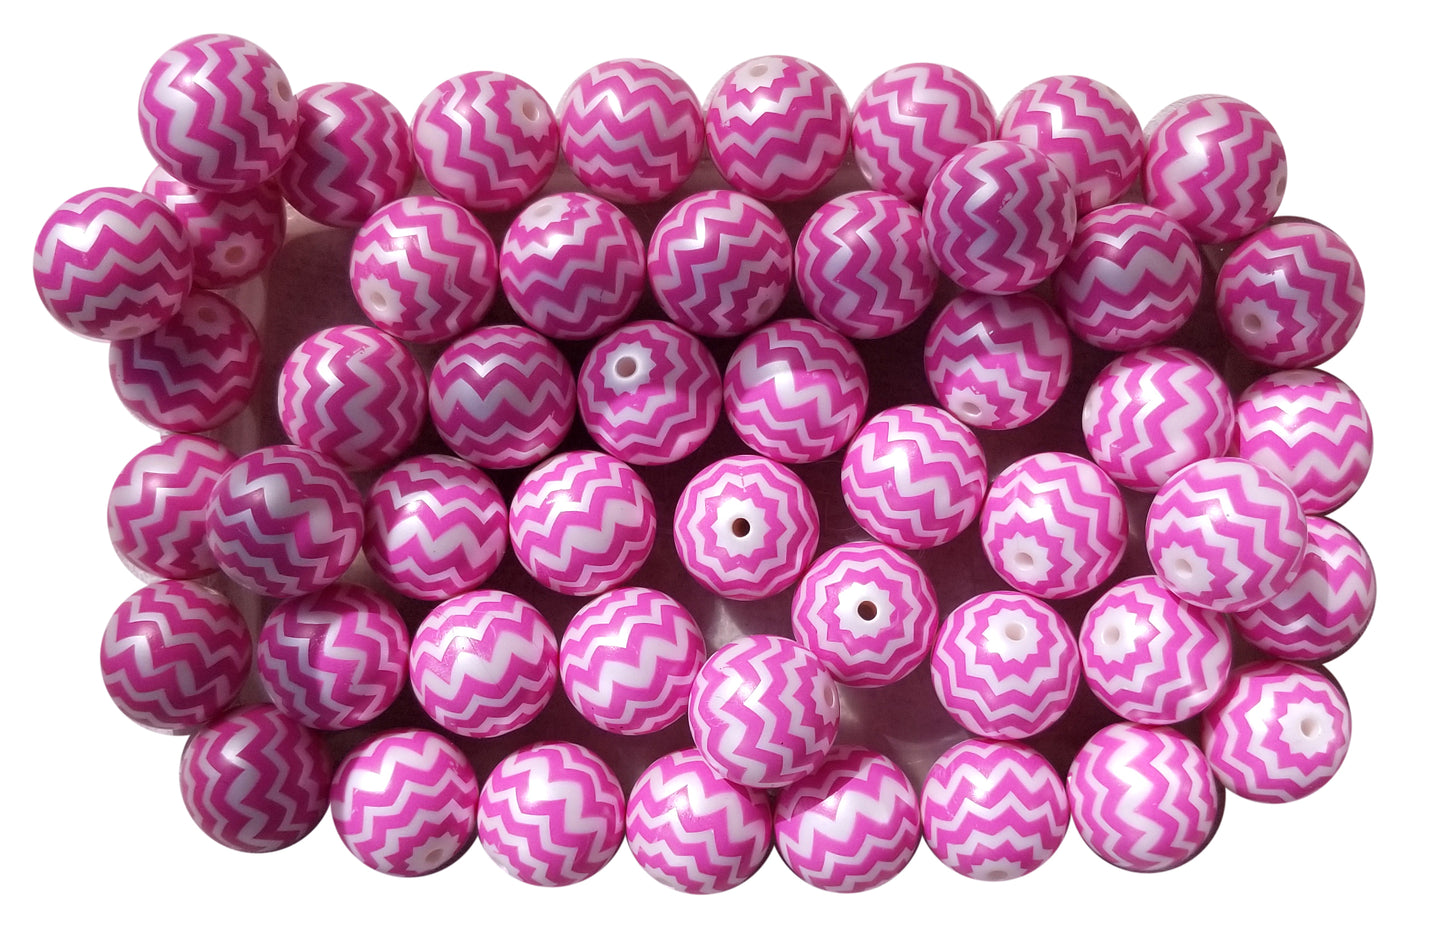 pink chevron 20mm bubblegum beads